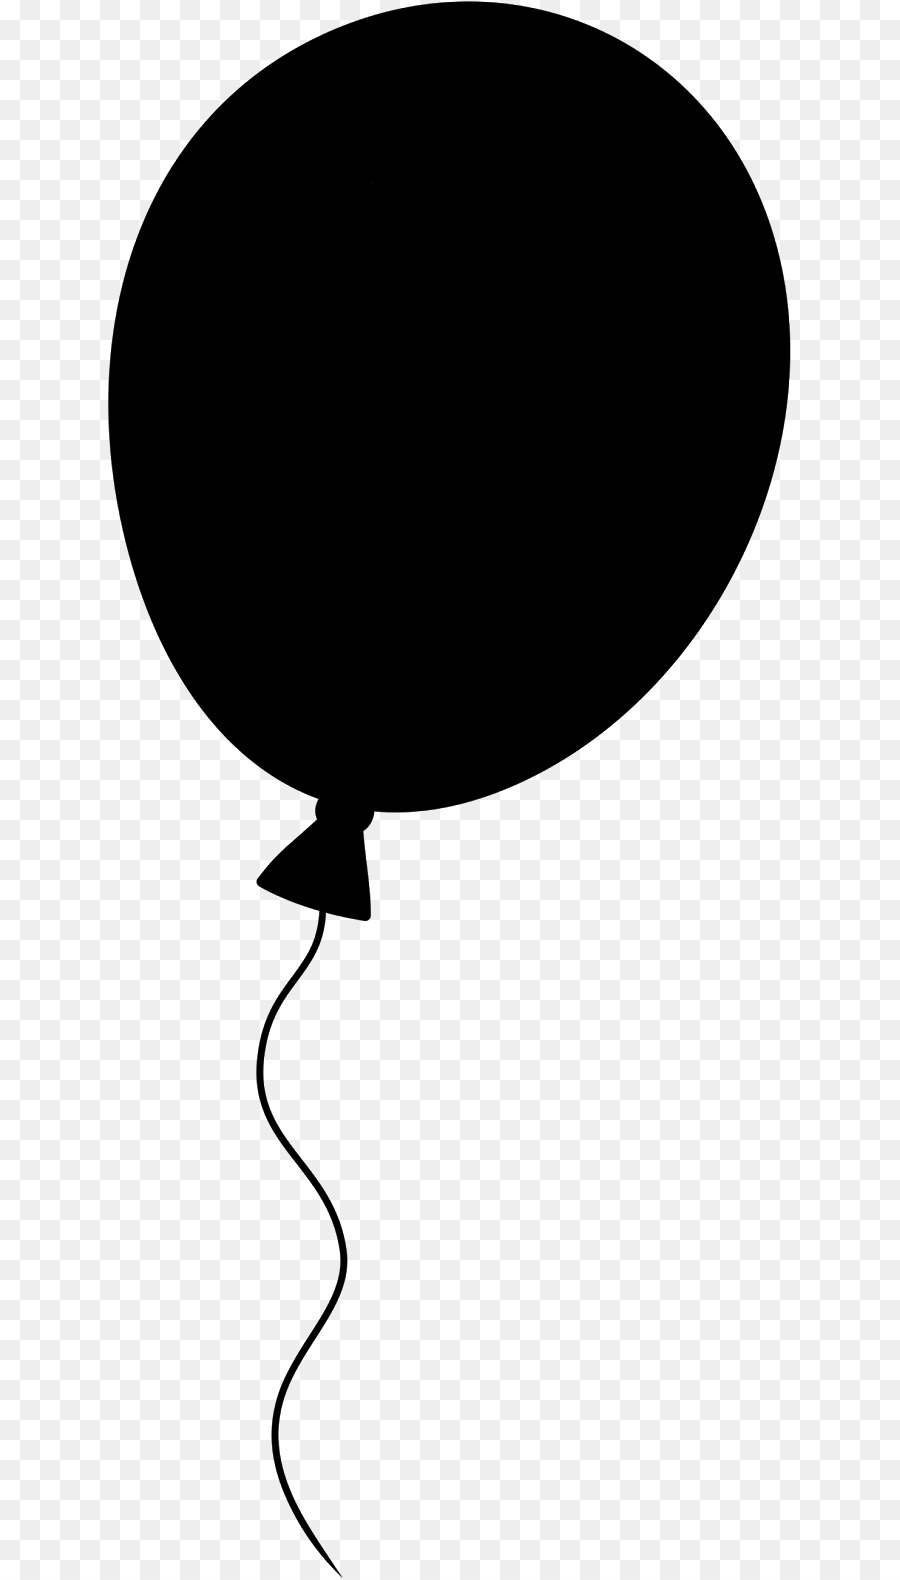 Balloon Silhouette